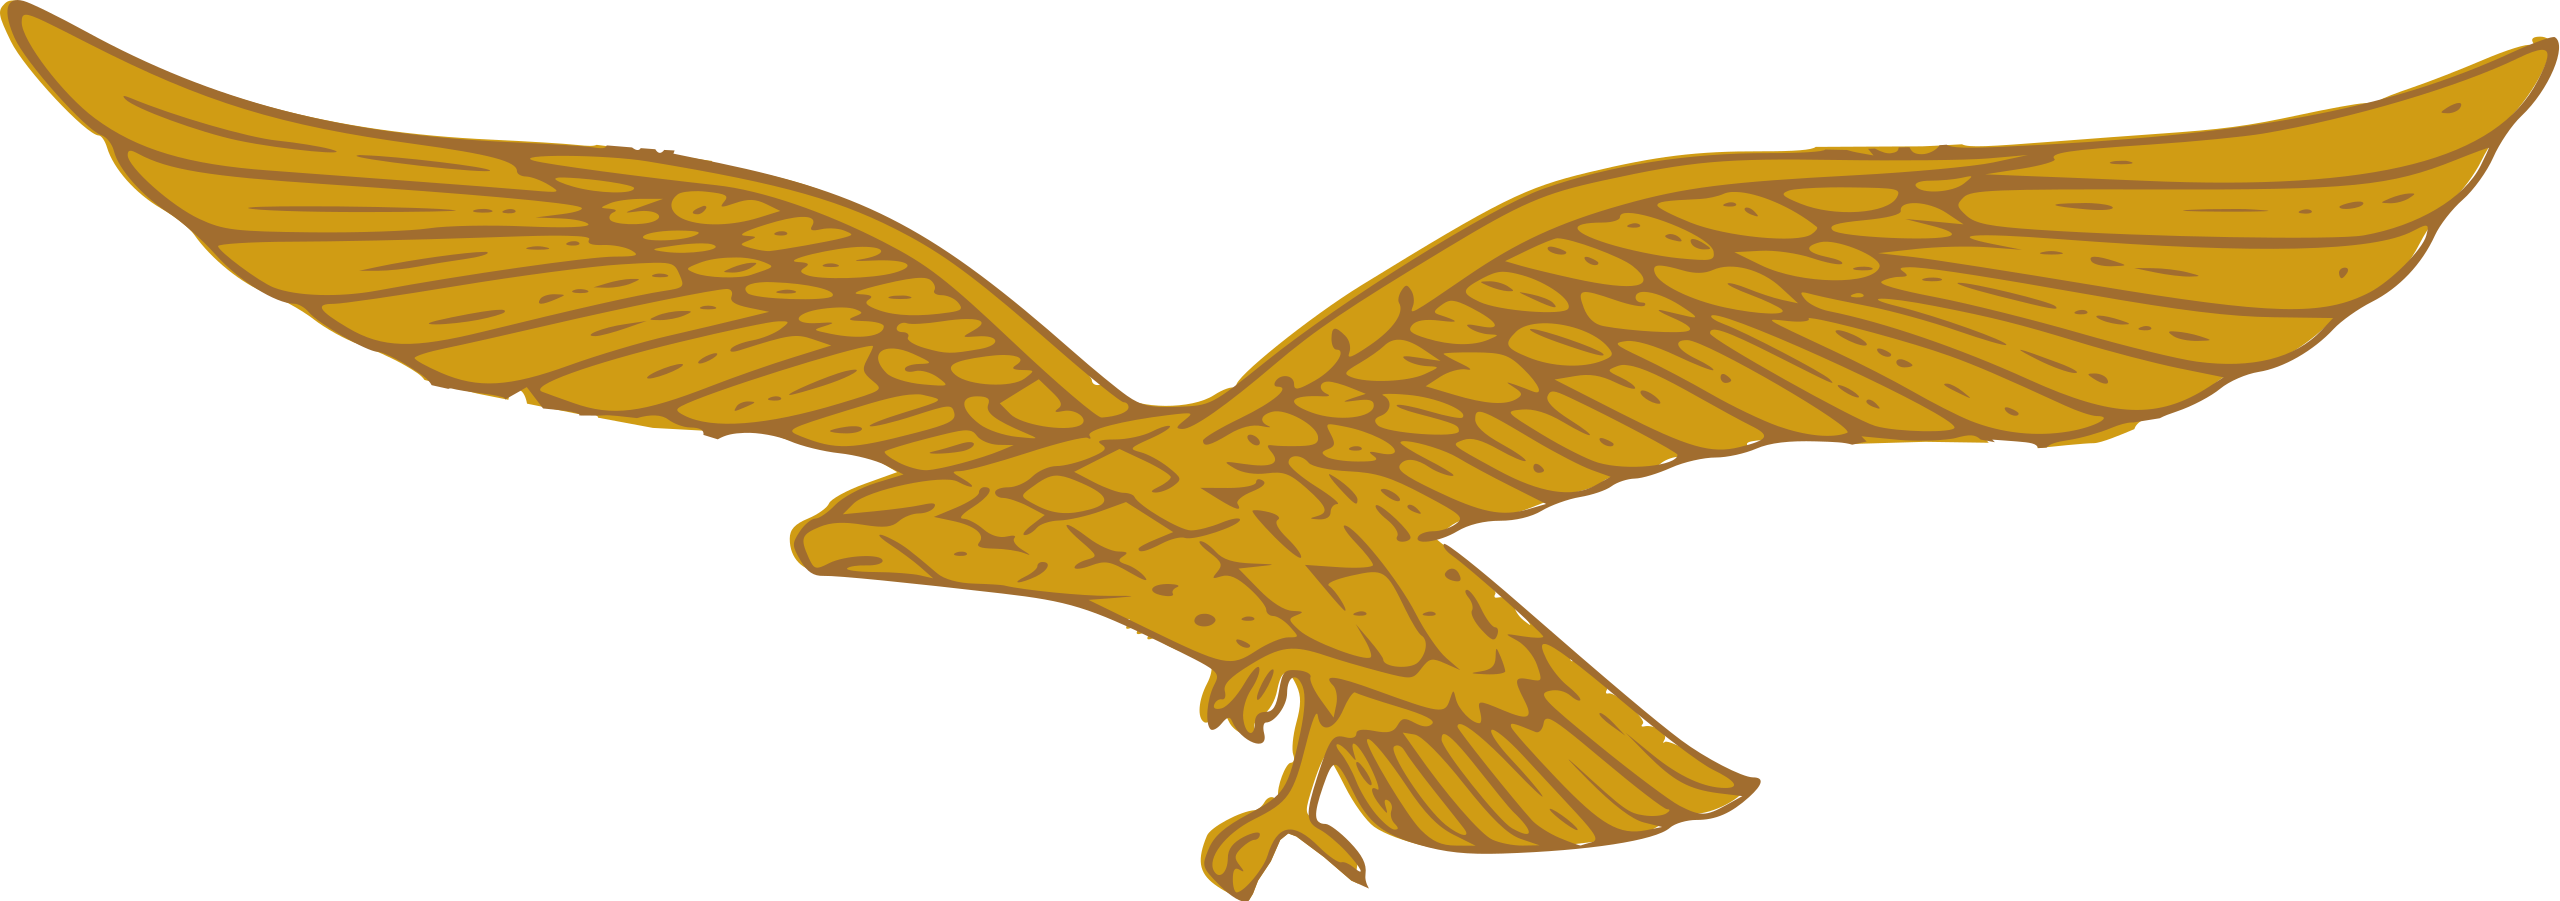 File:Luftwaffe eagle (gold)-No Swastika.svg - Wikimedia Commons